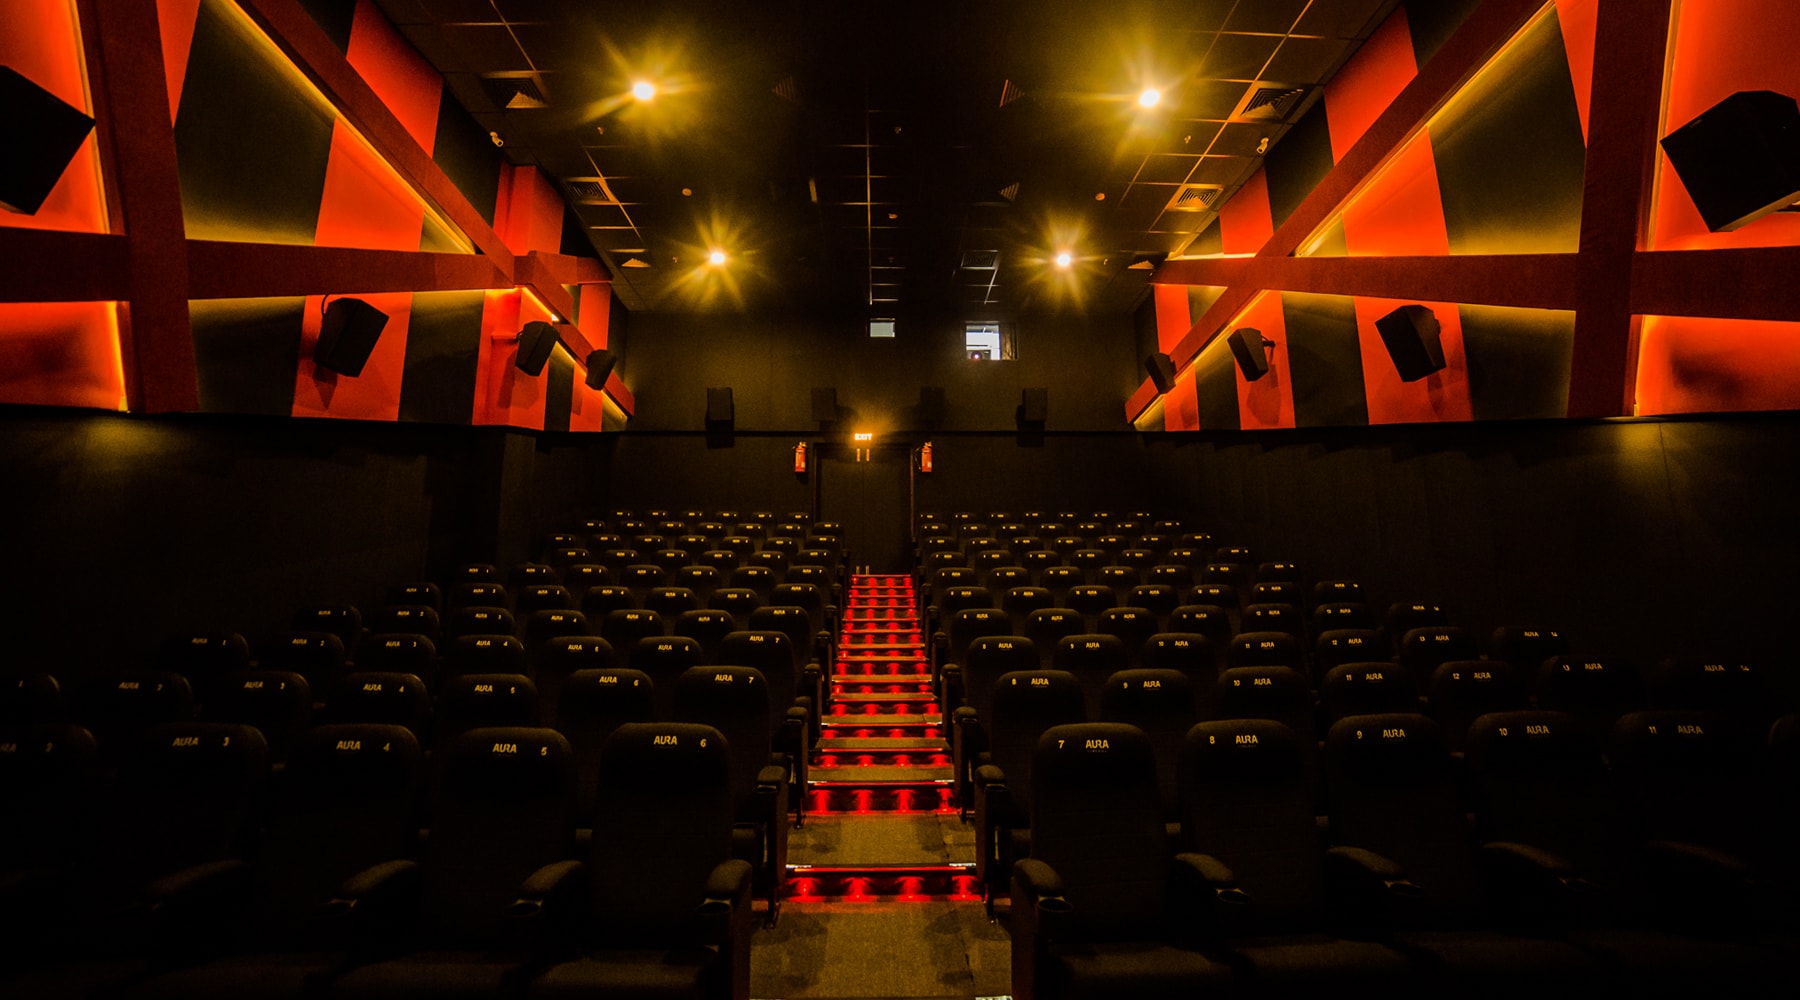 Aura cinemas branding-interior